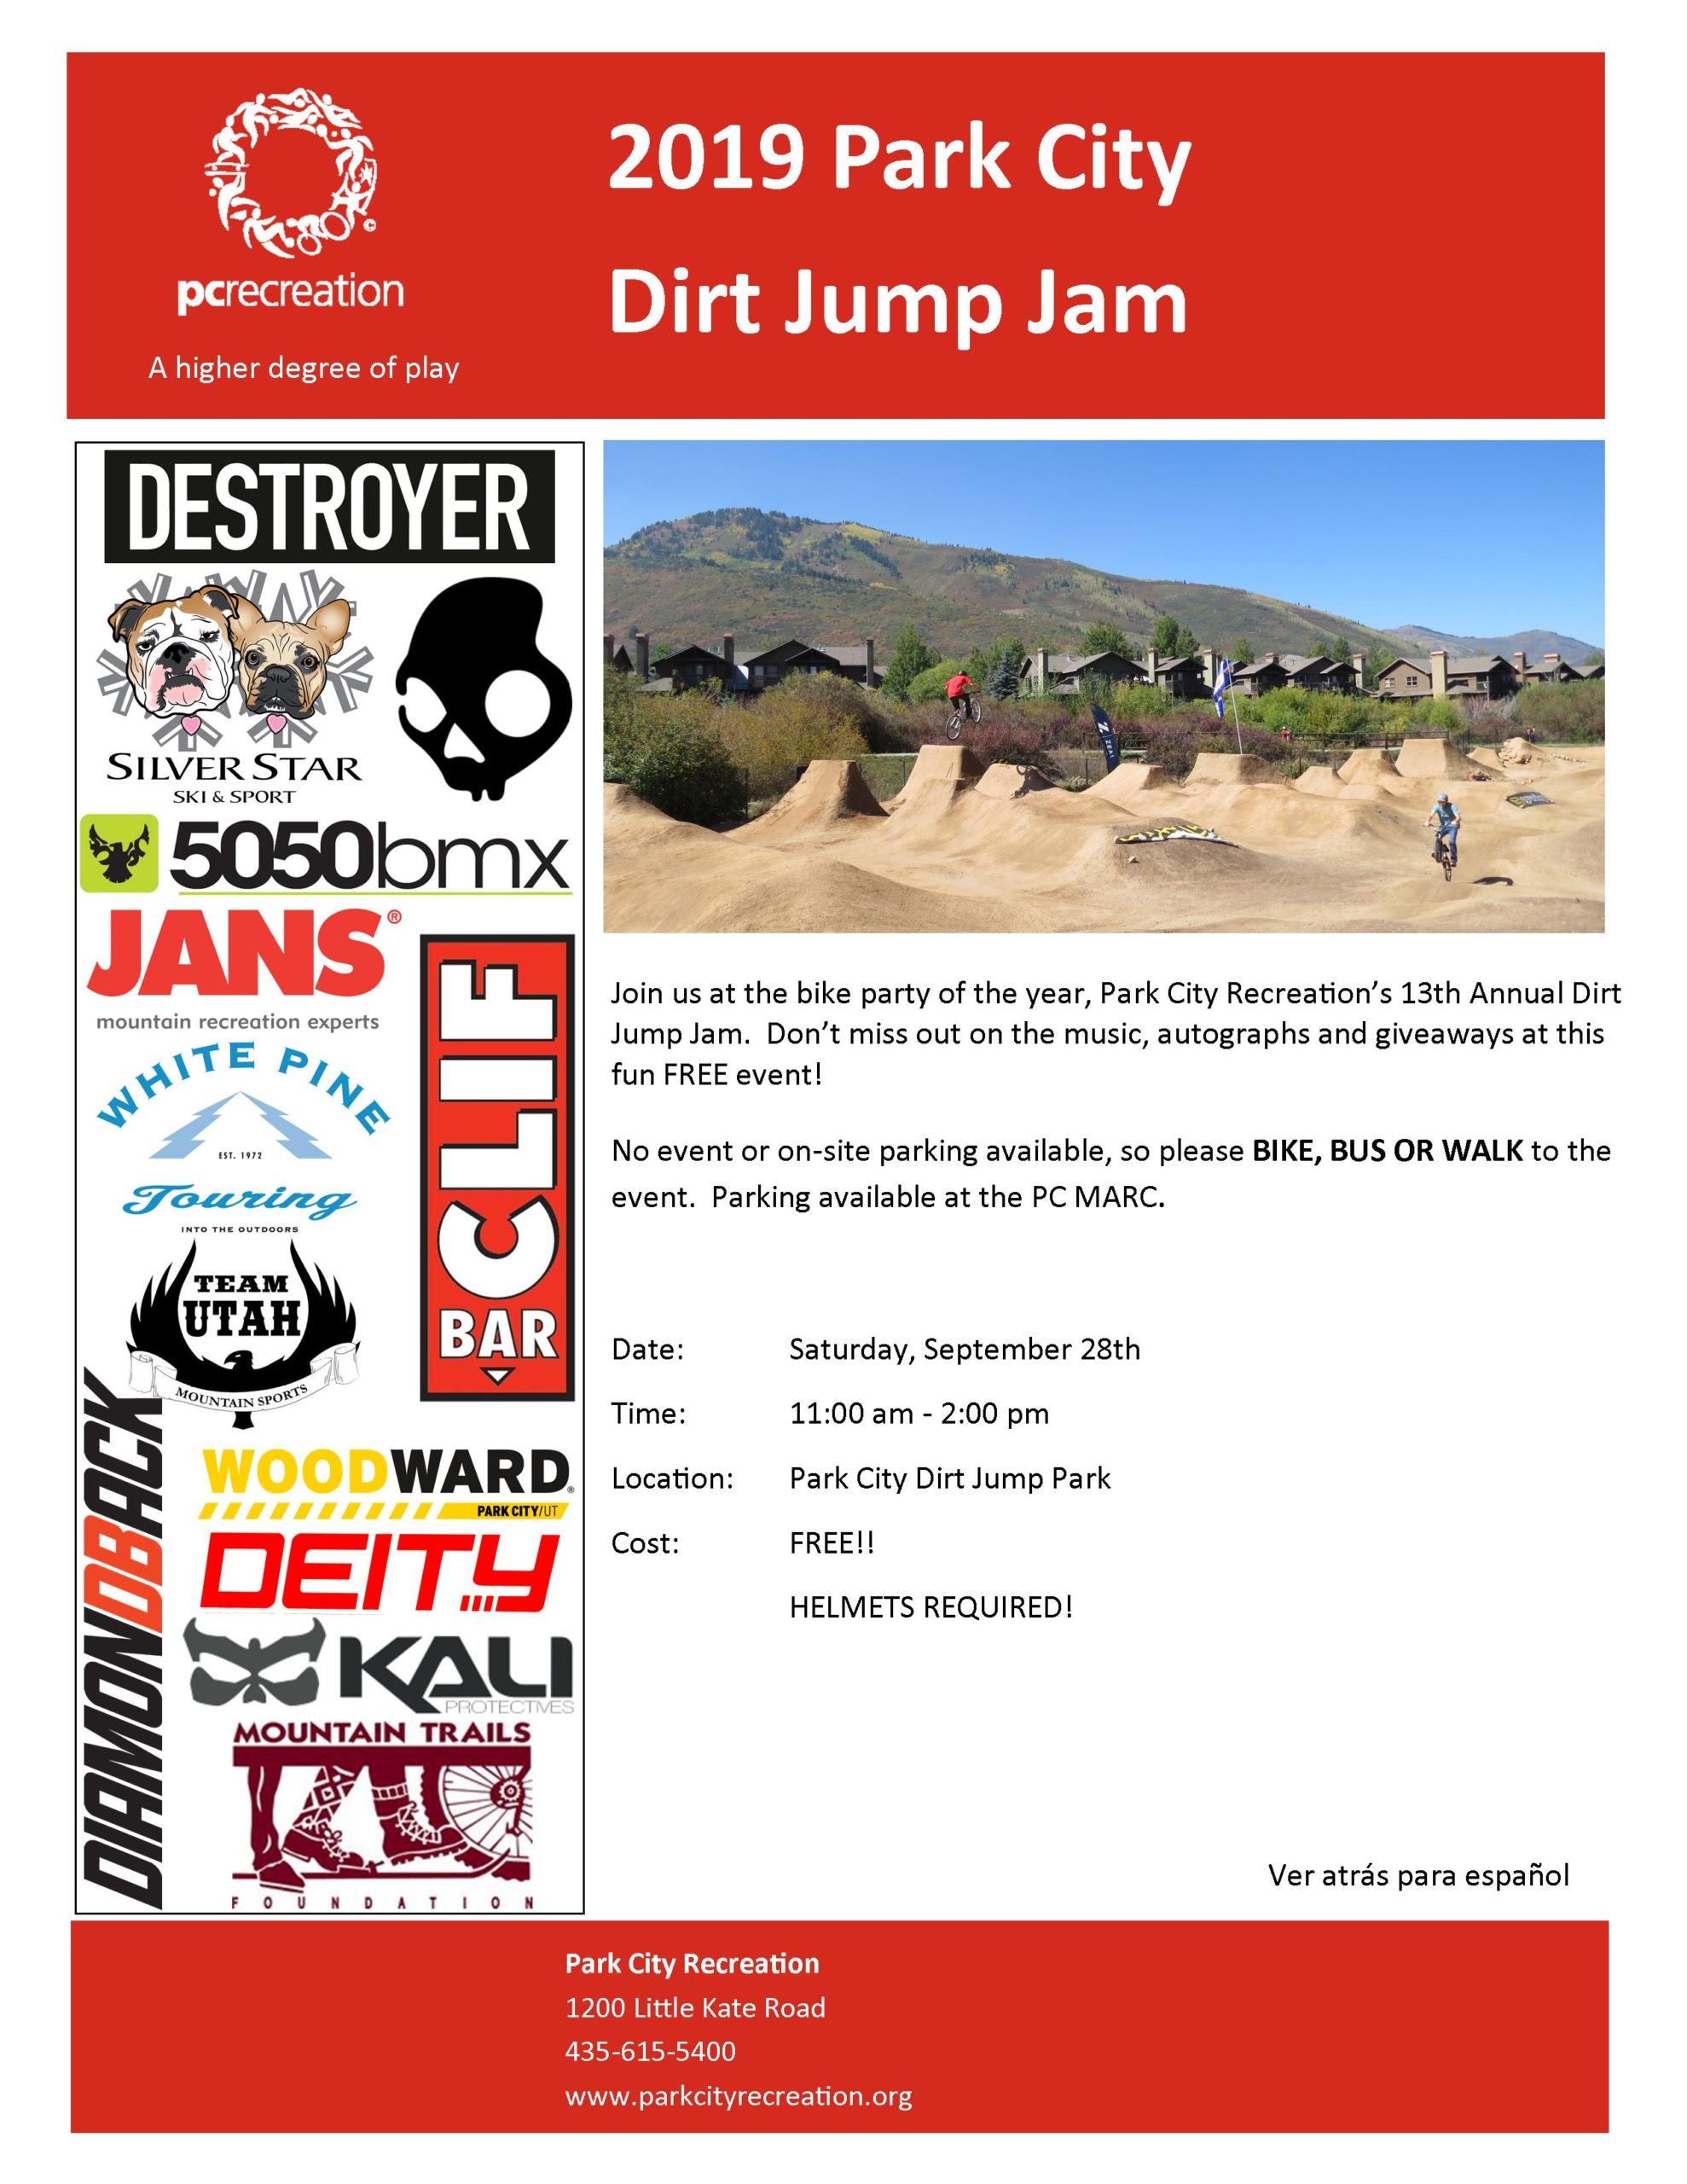 Dirt-Jump-Jam-2019-park-city-recreation